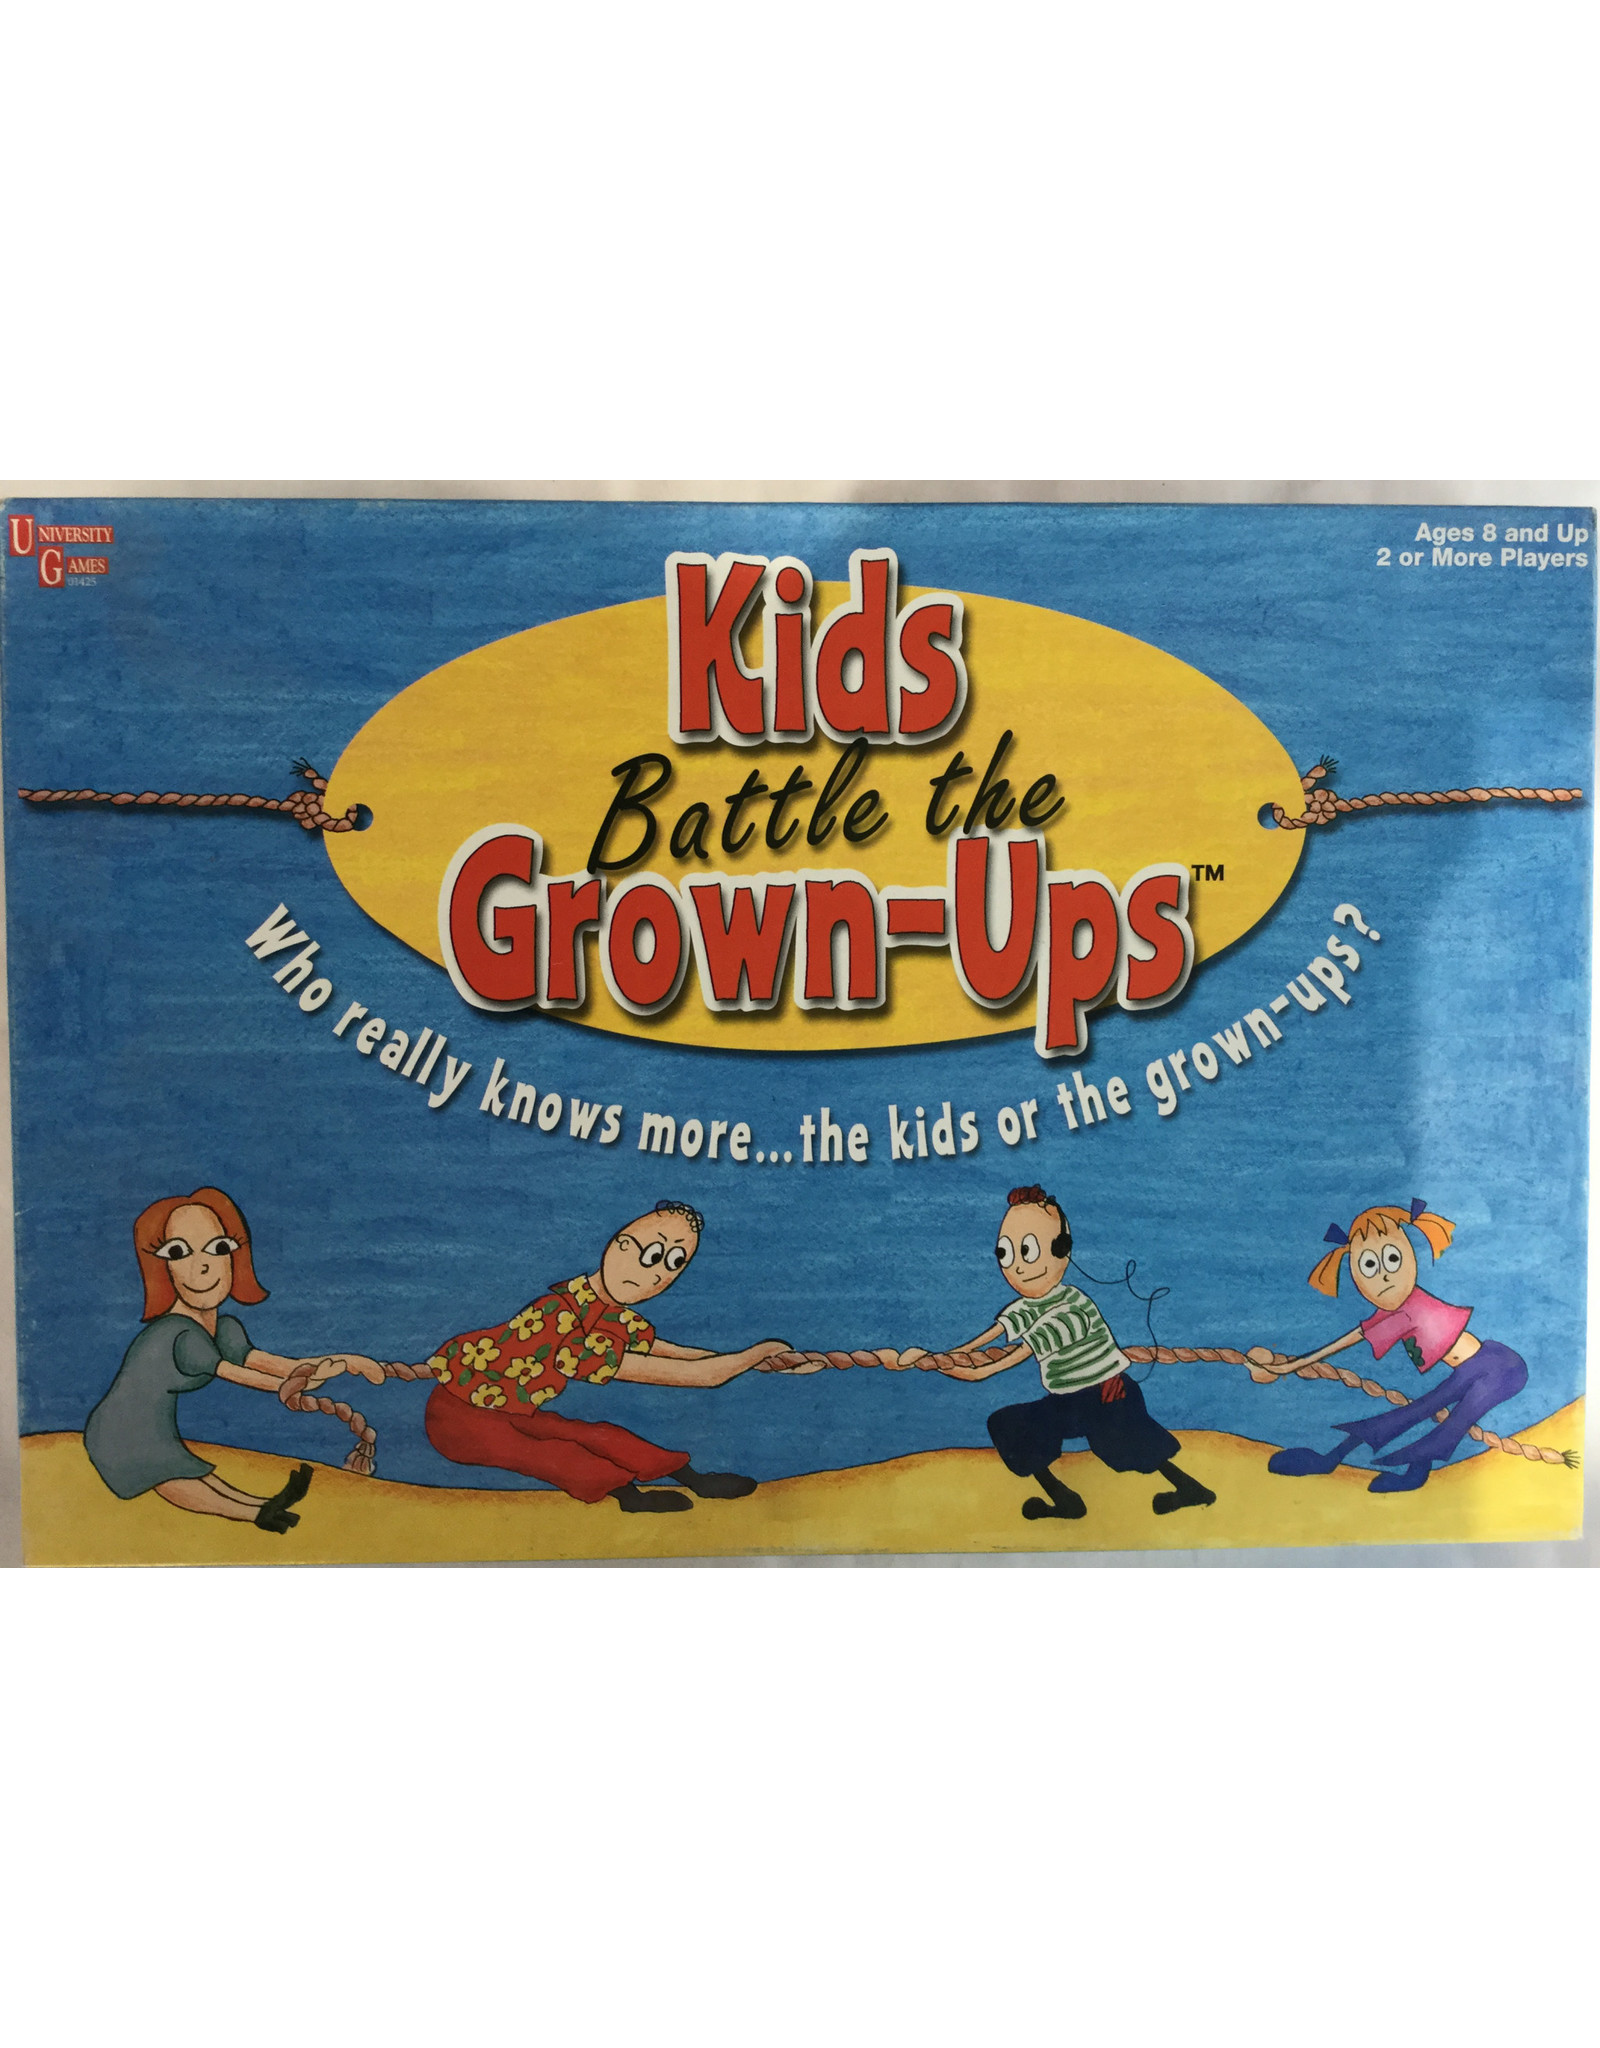 University Games Kids Battle the Grown-Ups (2002)